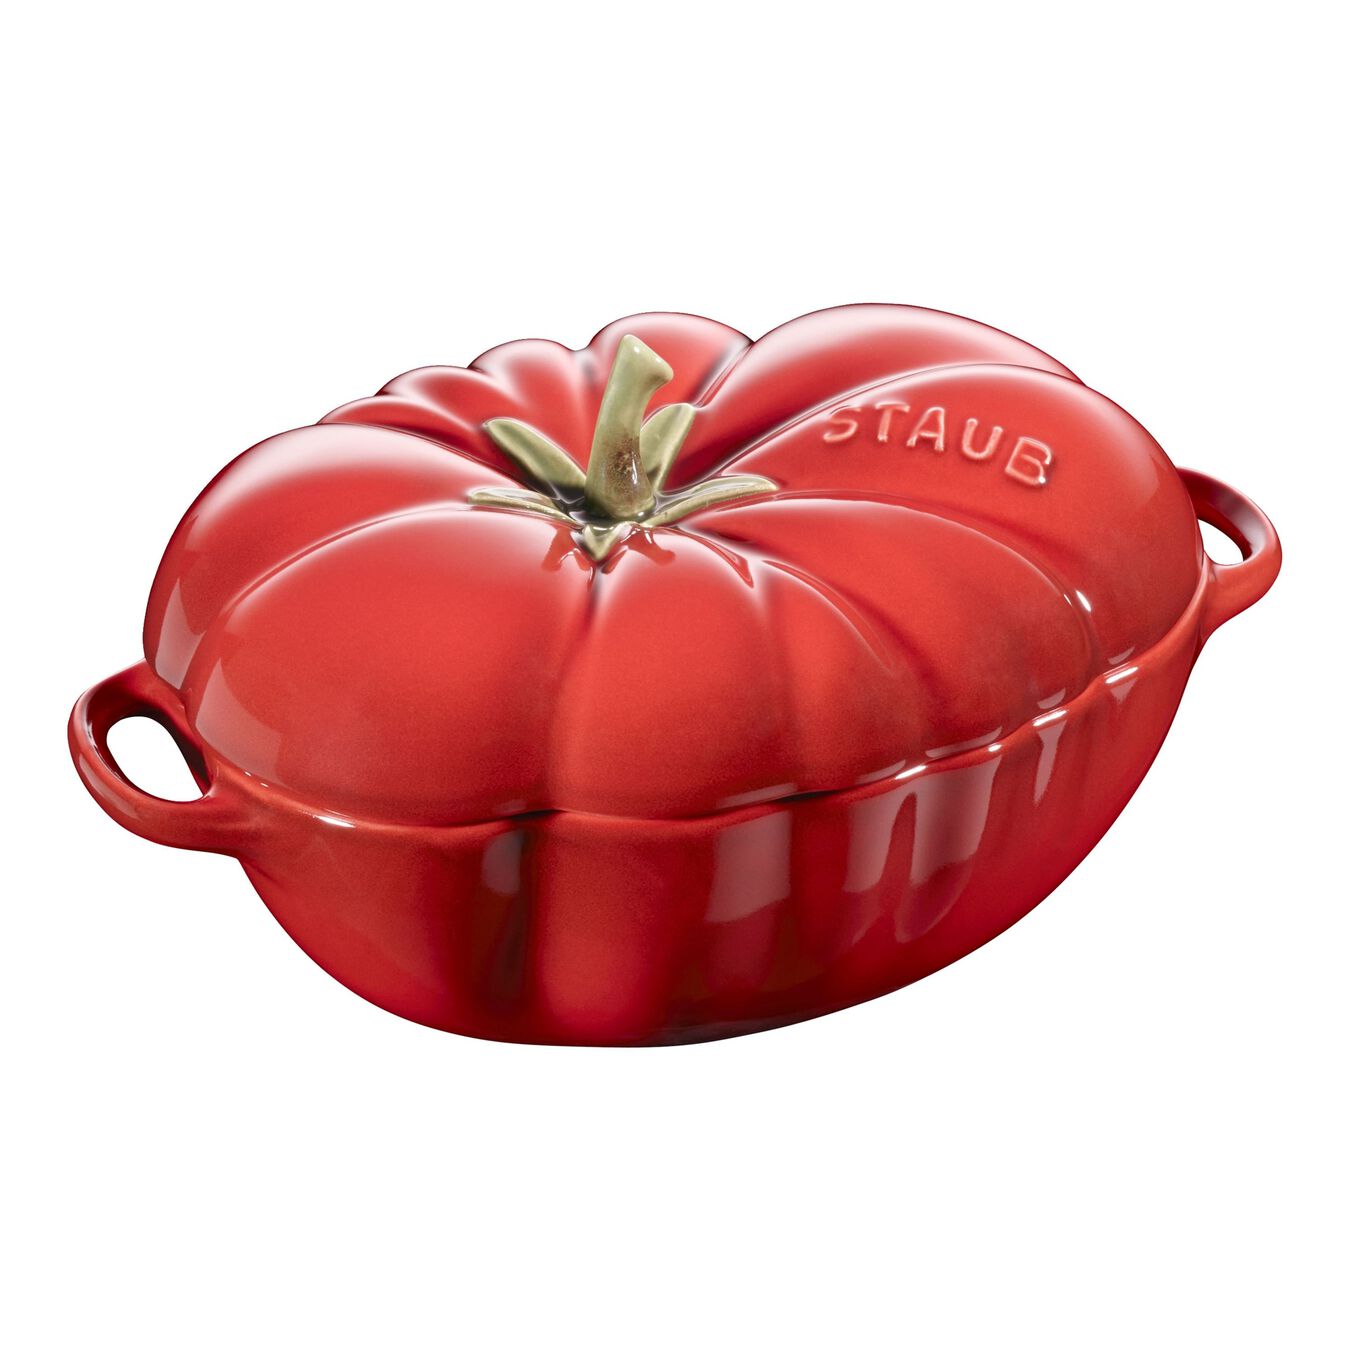 Cocotte 16 cm, tomato, Cereza, Cerámica,,large 1